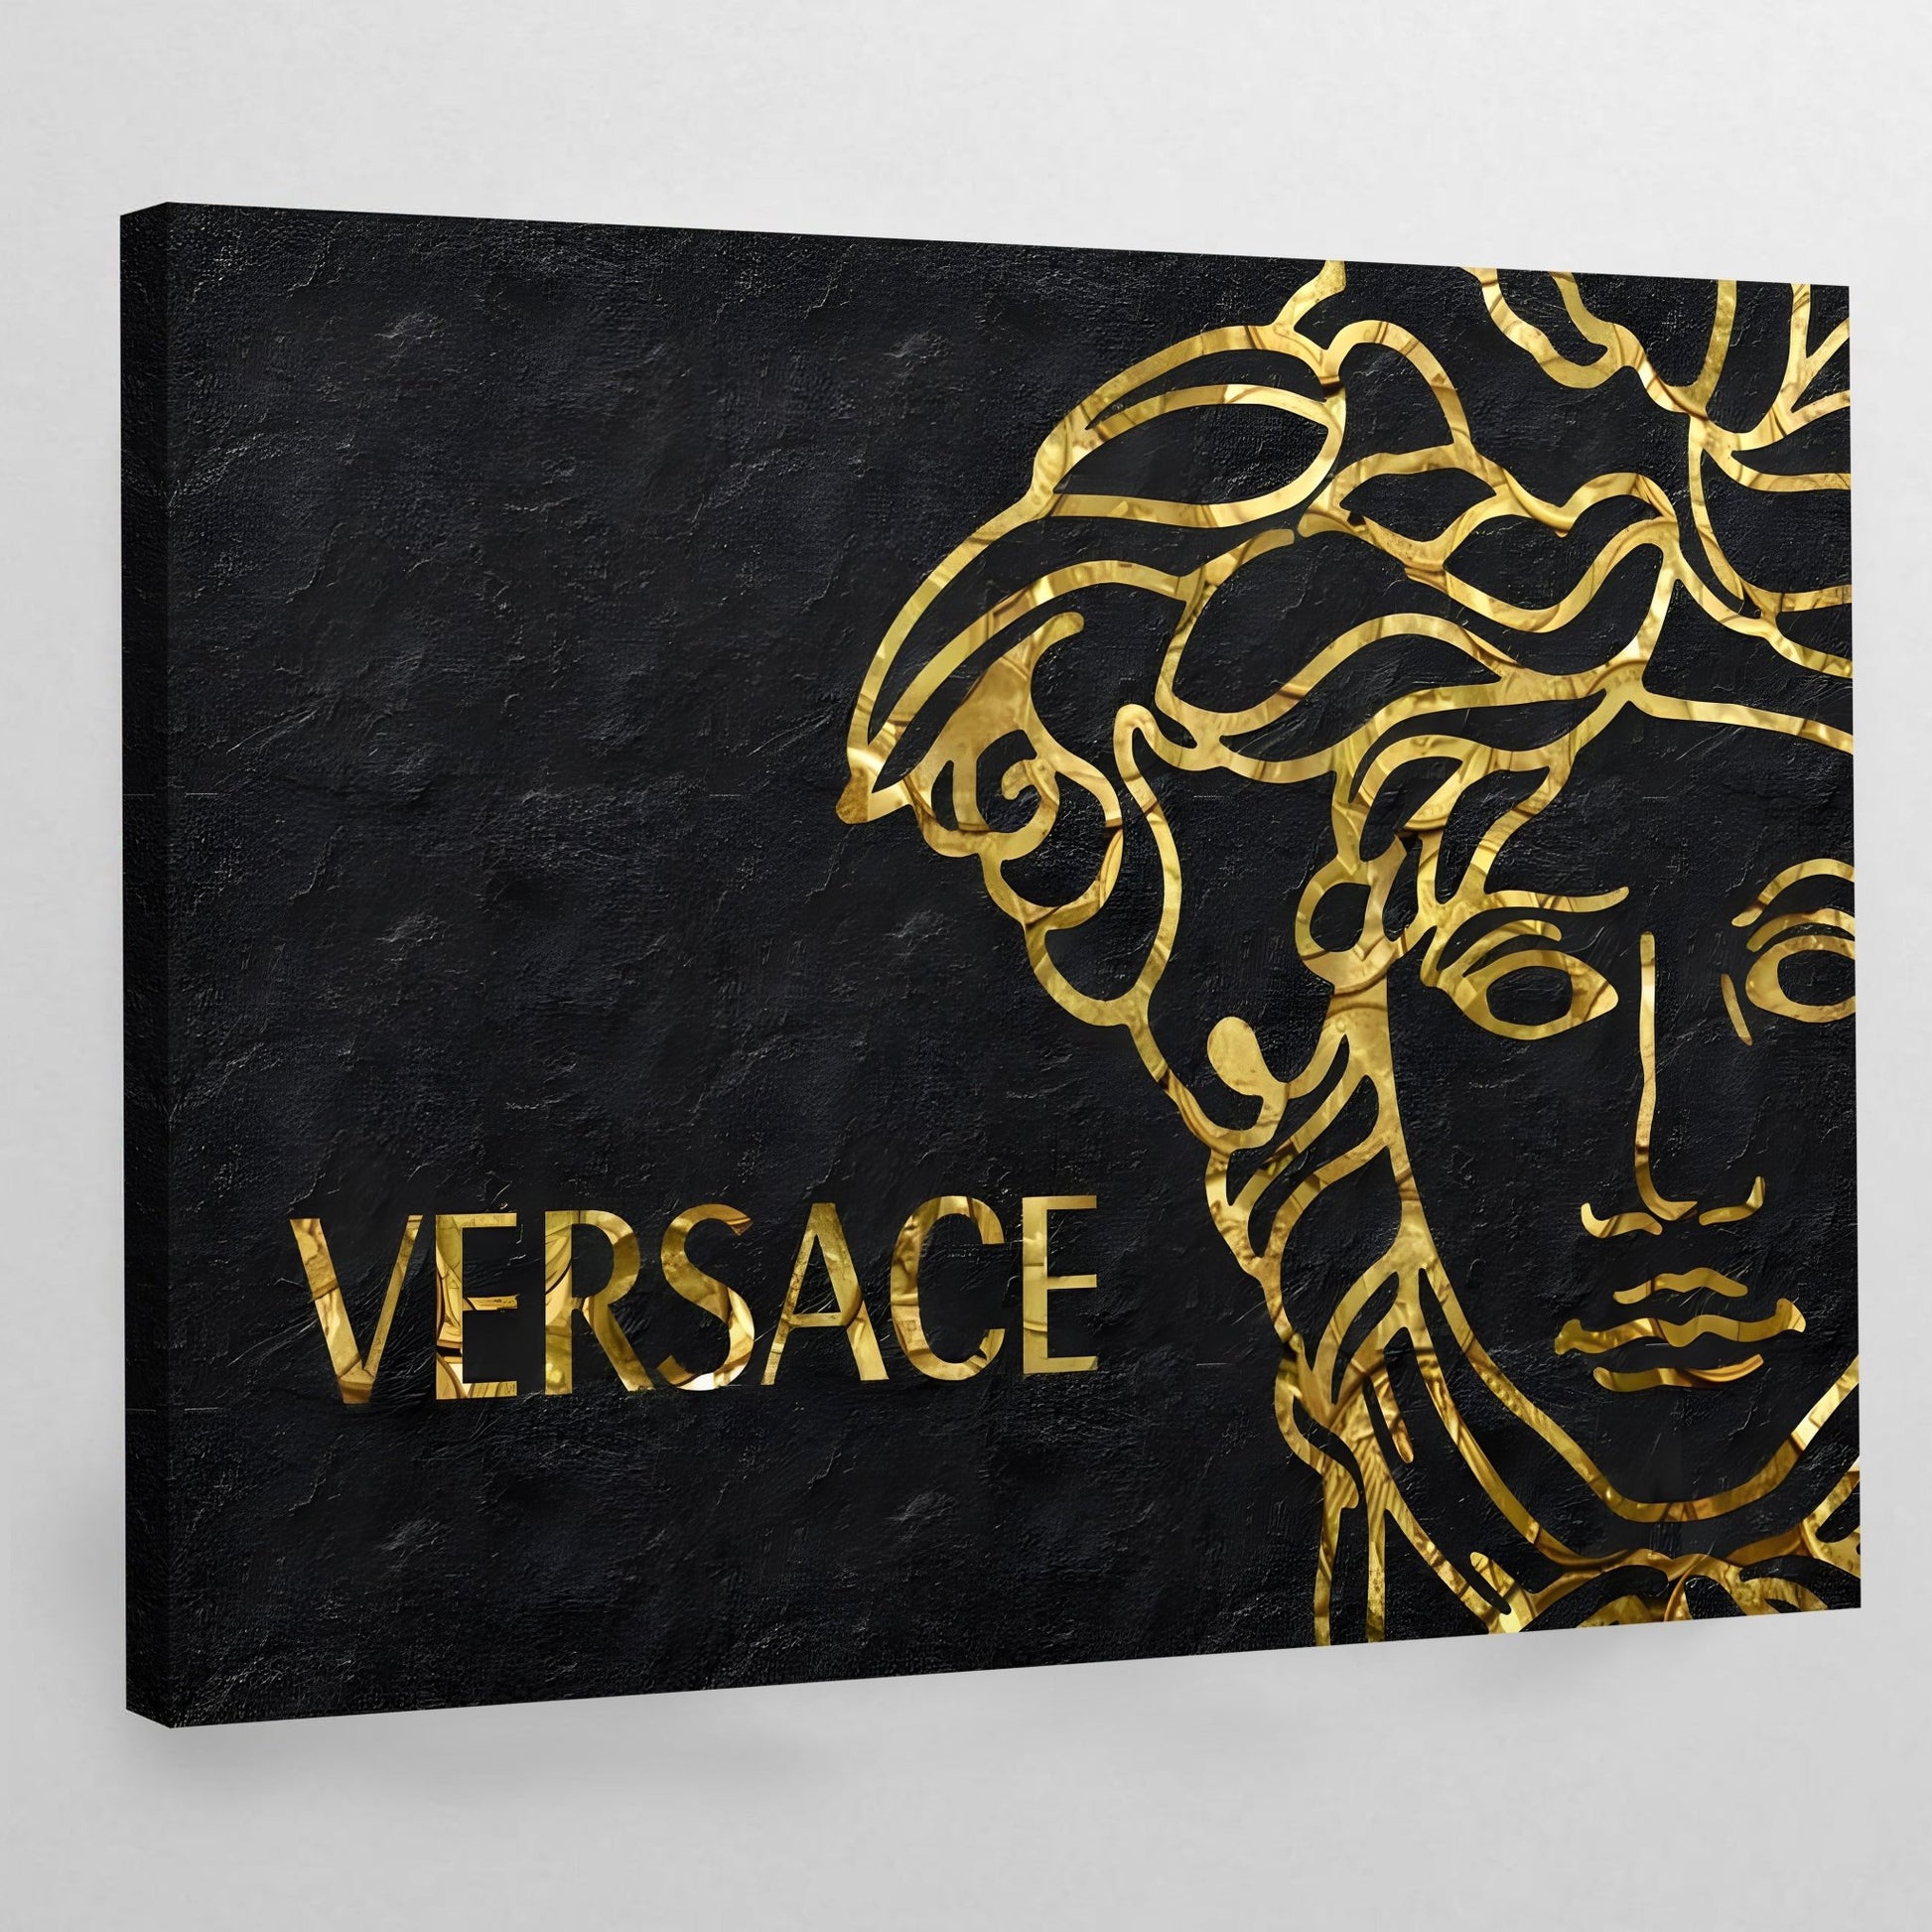 Versace Wall Art - Luxury Art Canvas